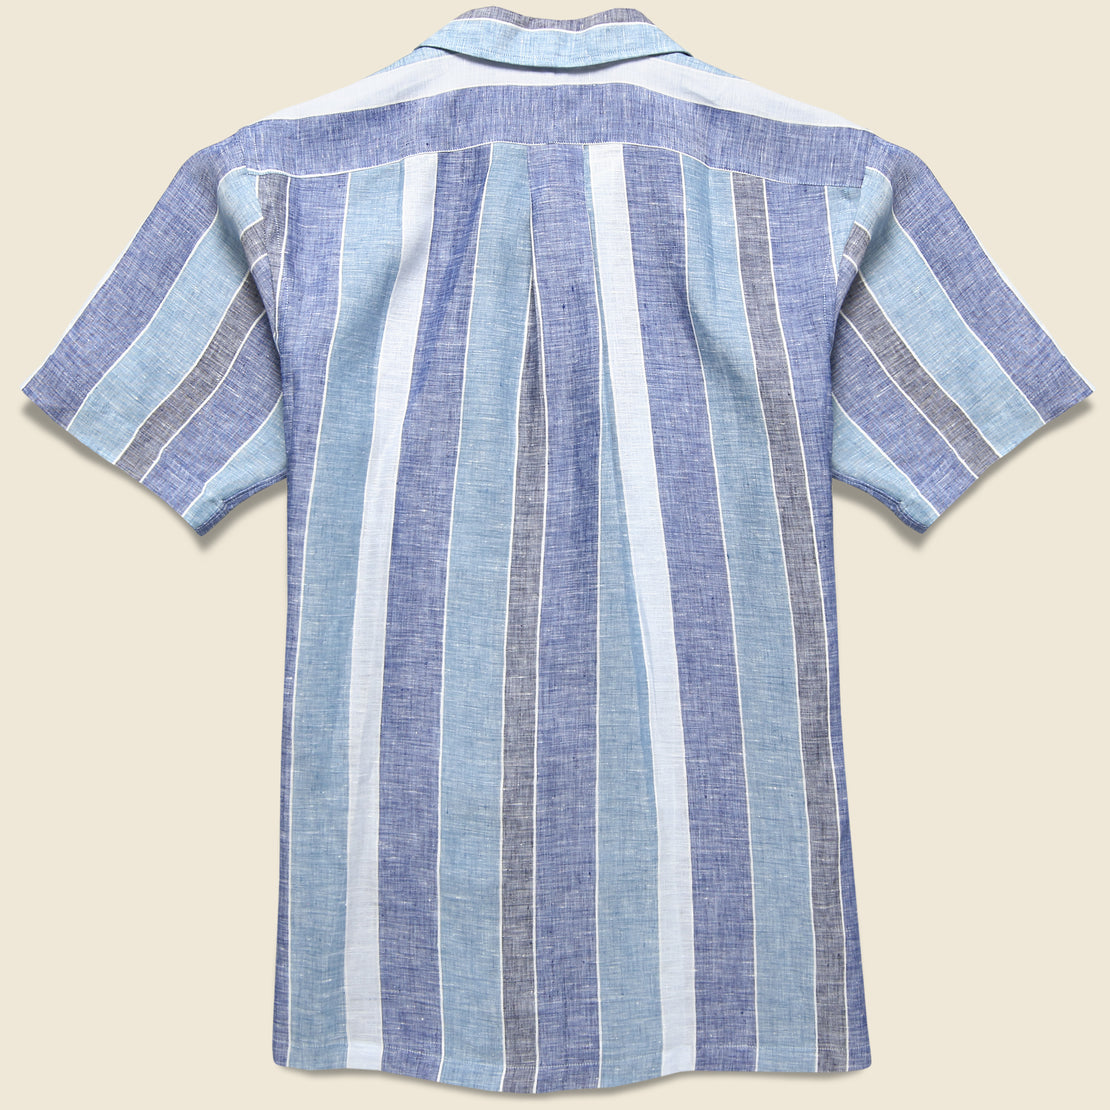 Wide Stripe Linen Camp Shirt - Blue/White - Hamilton Shirt Co. - STAG Provisions - Tops - S/S Woven - Stripe